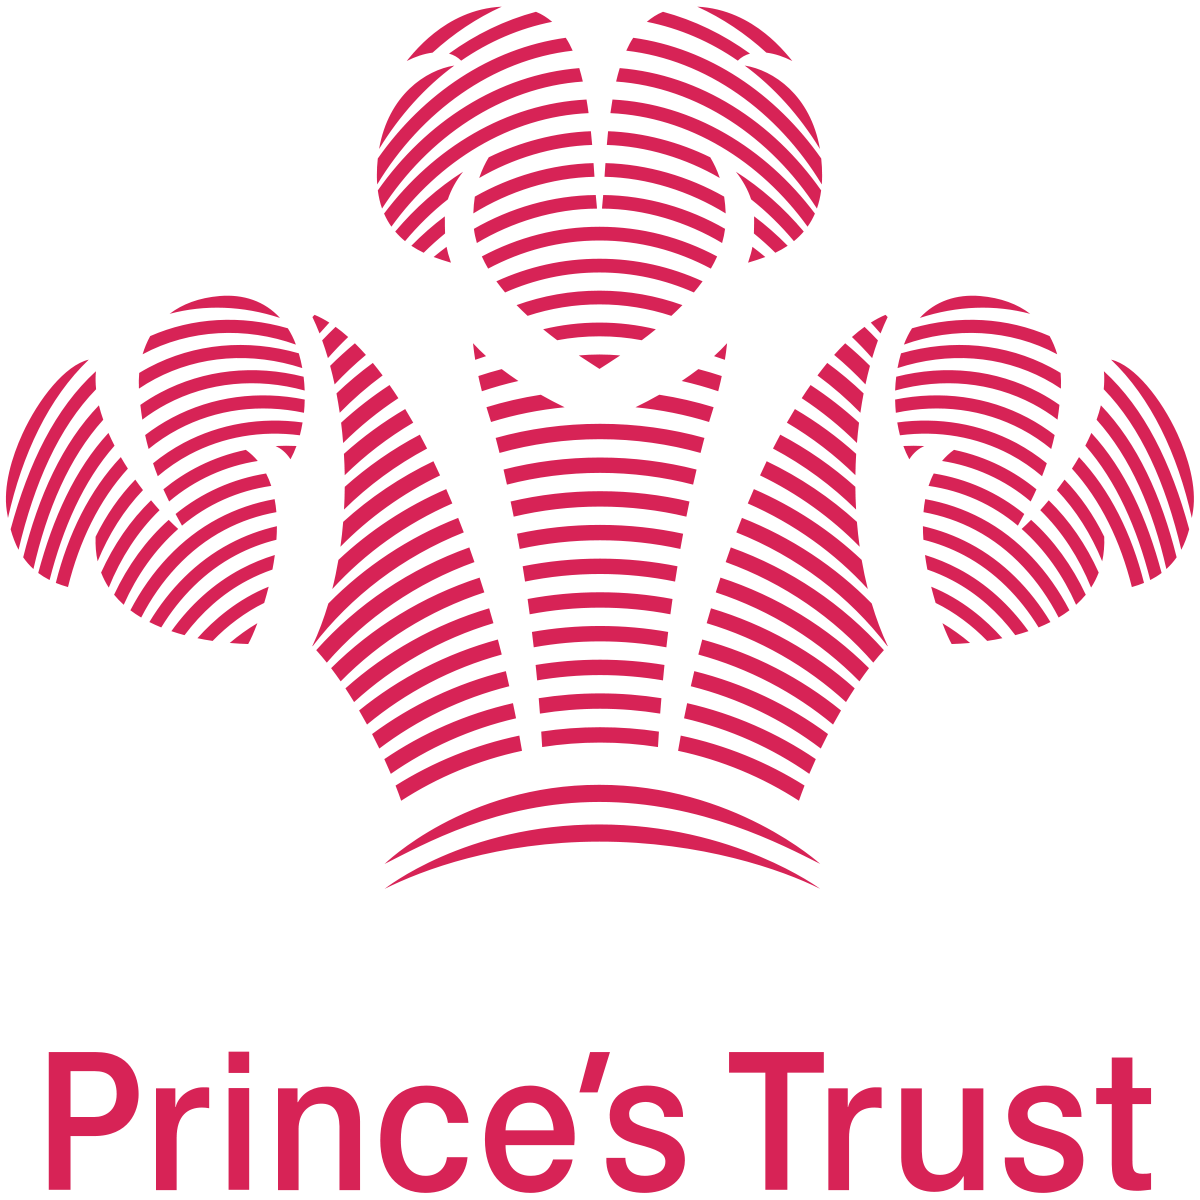 The princes trust logo.